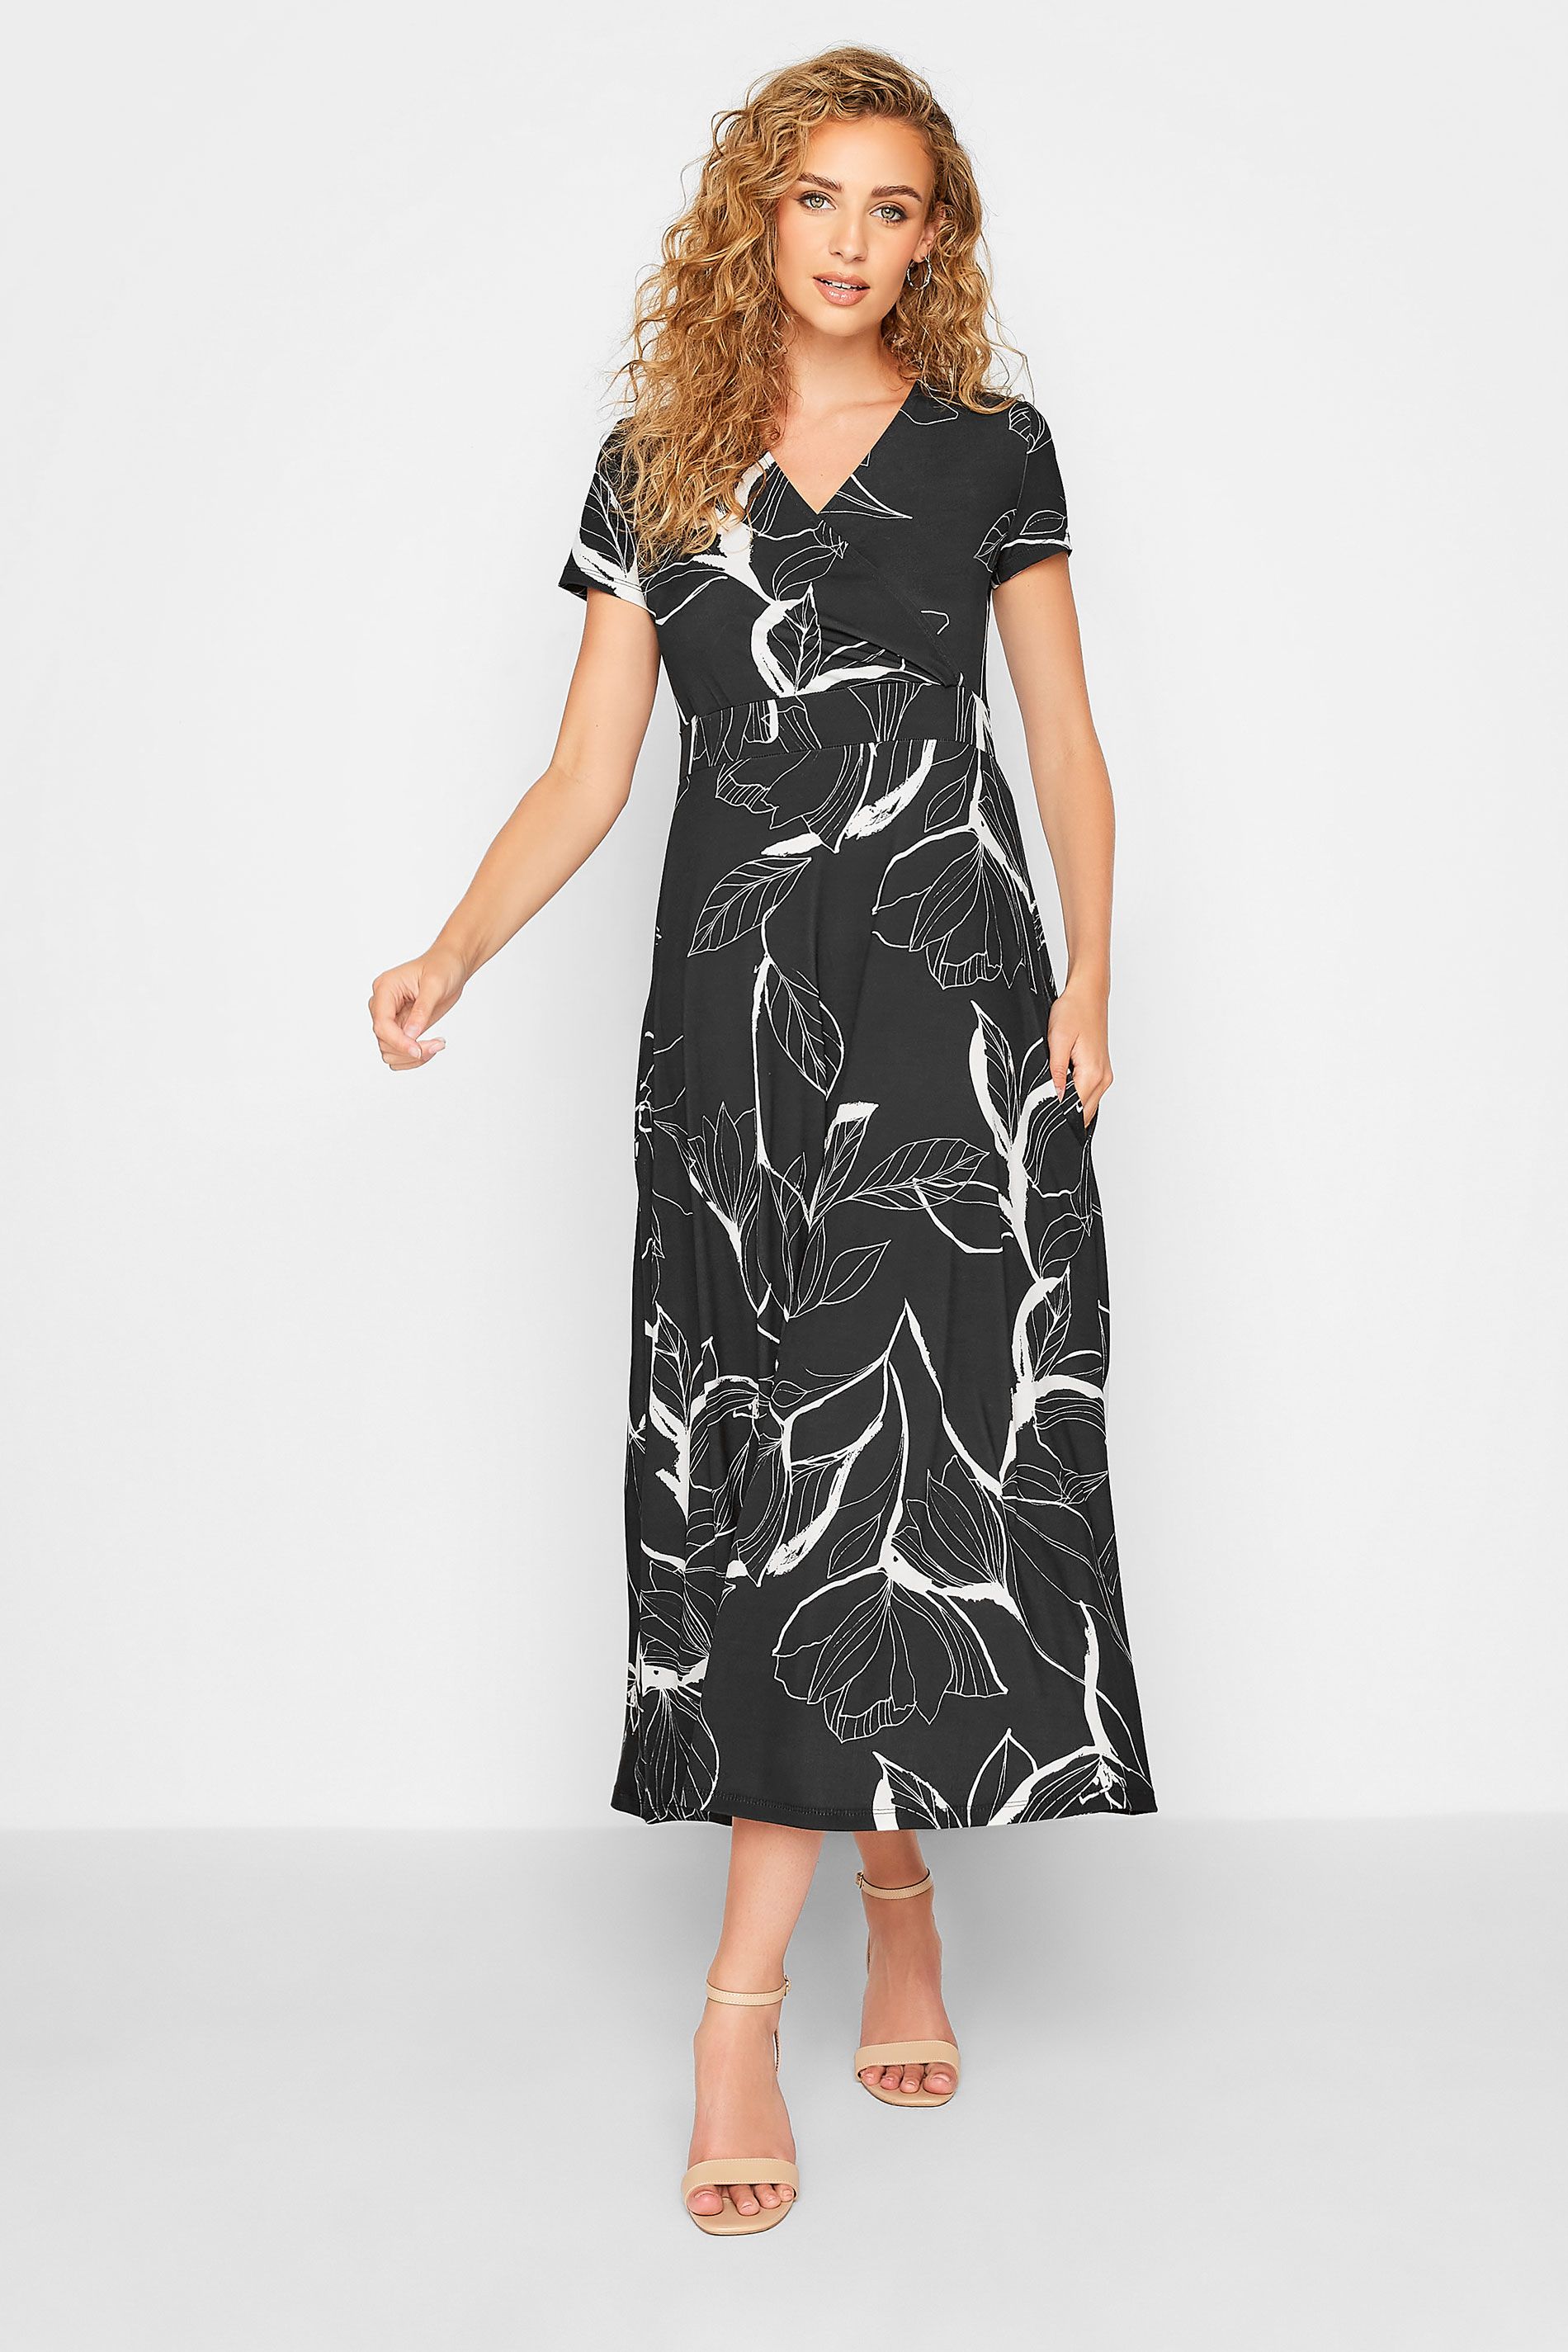 LTS Tall Black Floral V-Neck Midaxi Dress | Long Tall Sally